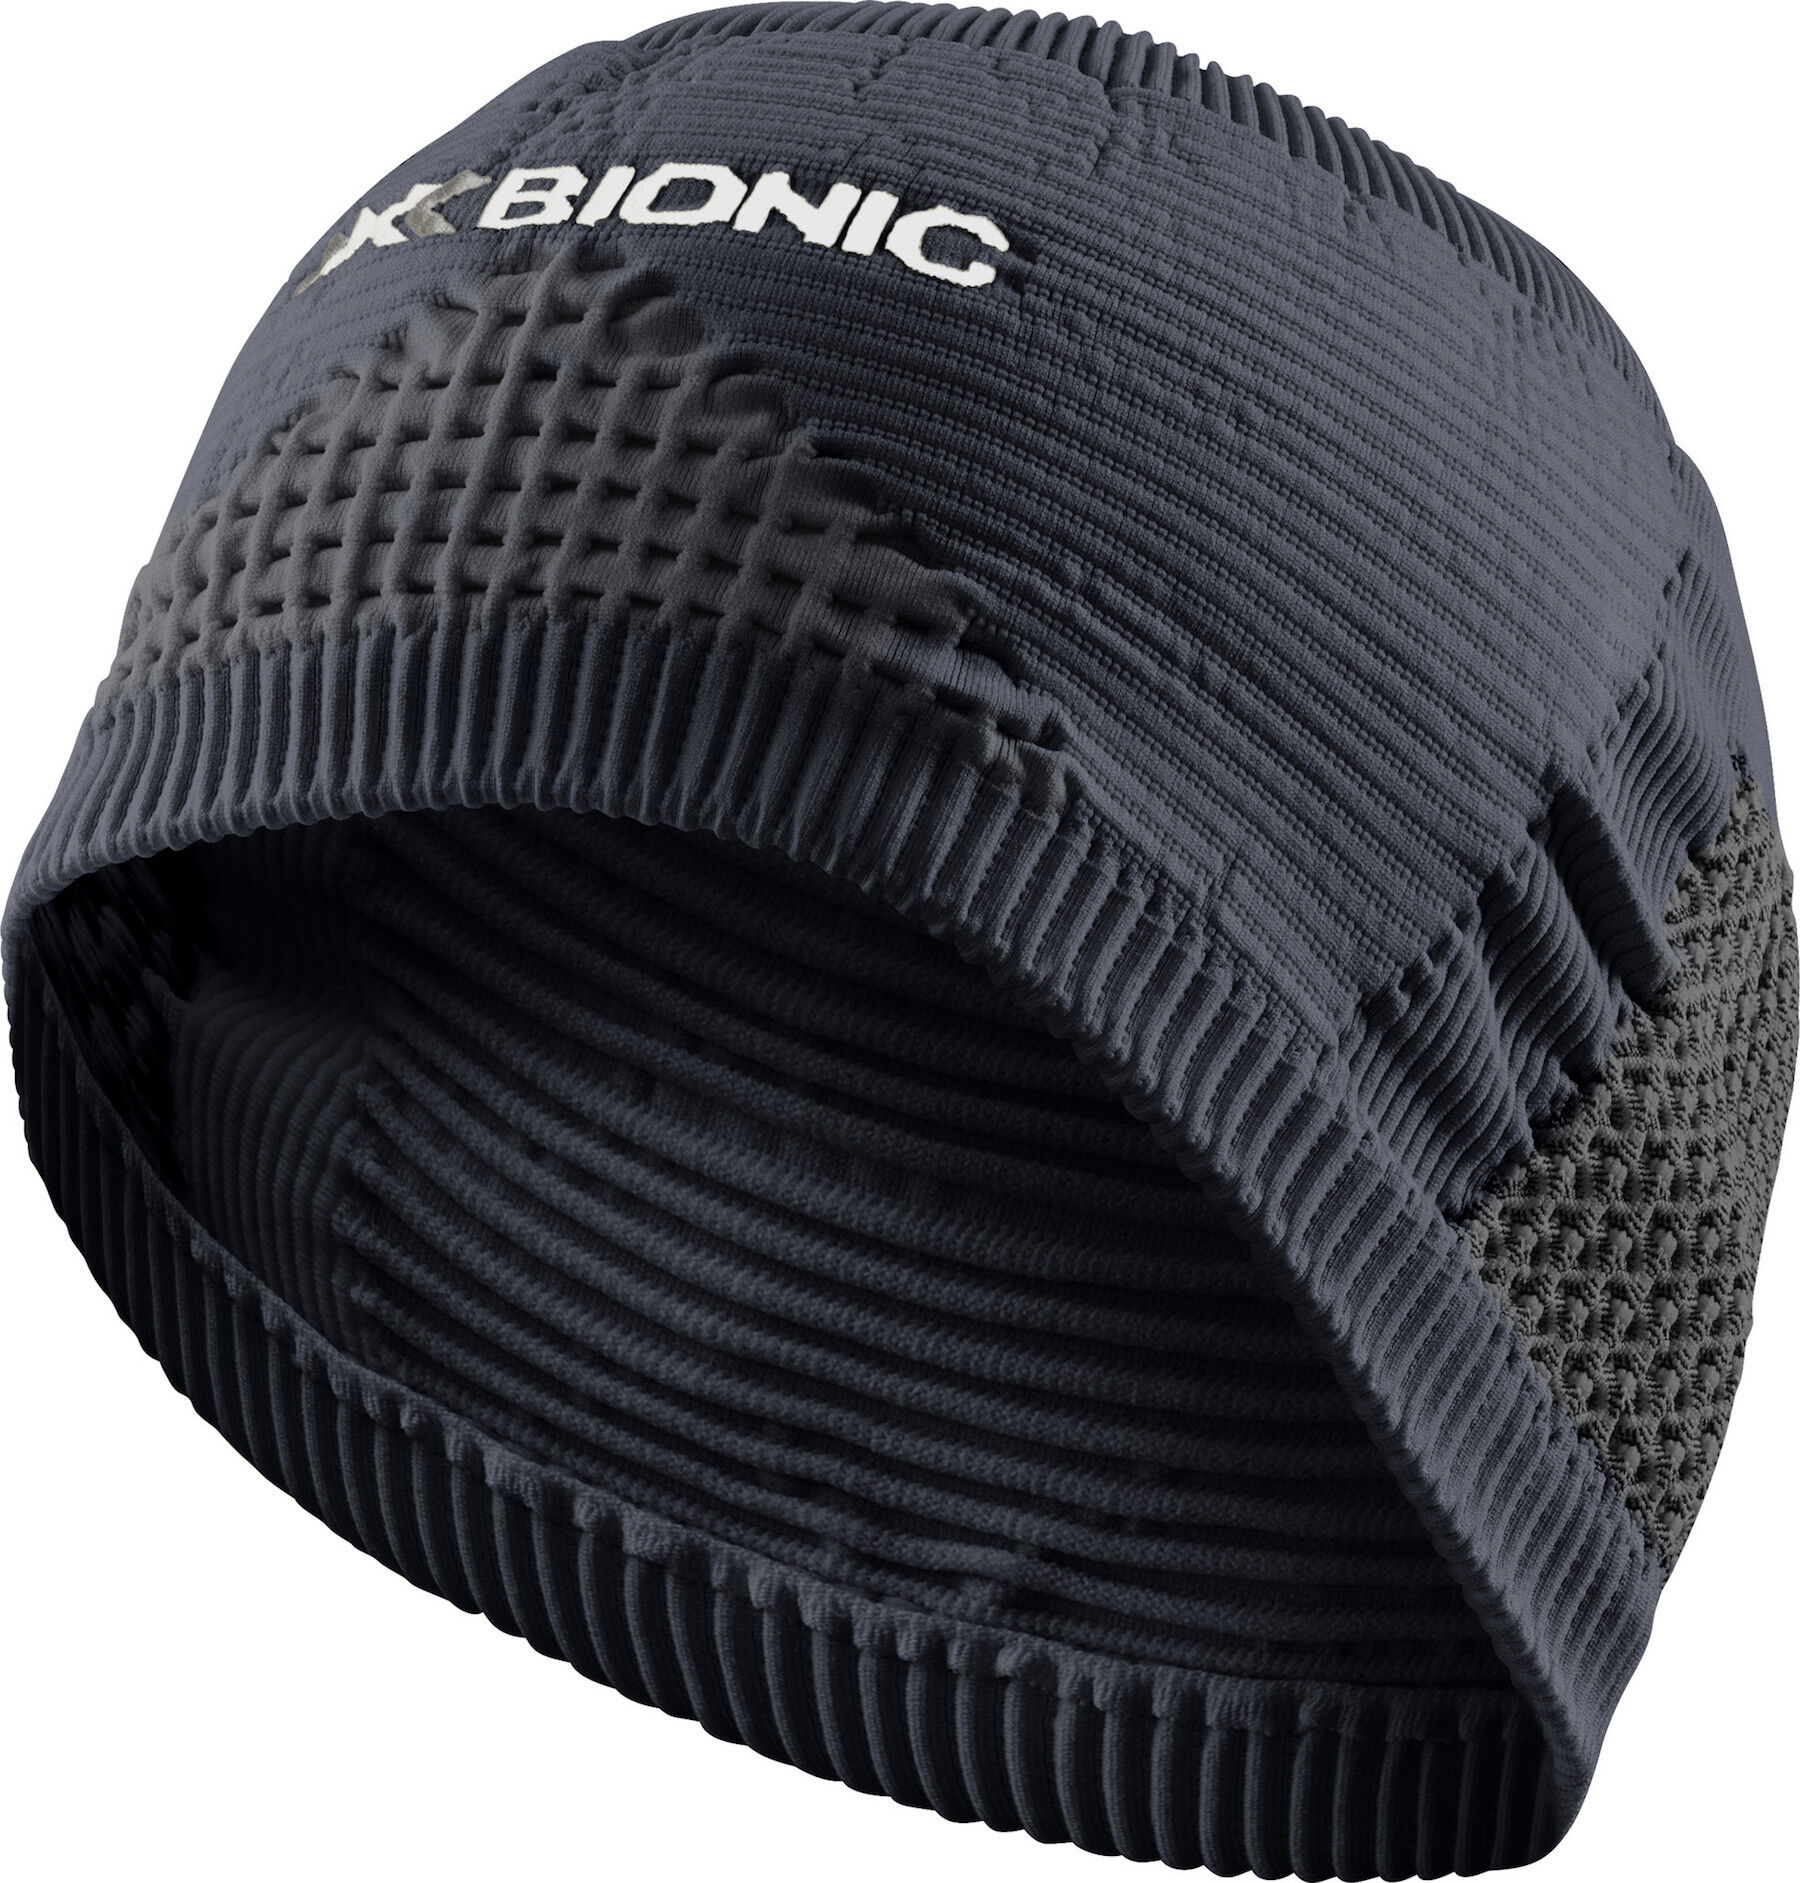 X-Bionic - Headband High - Cinta para la frente